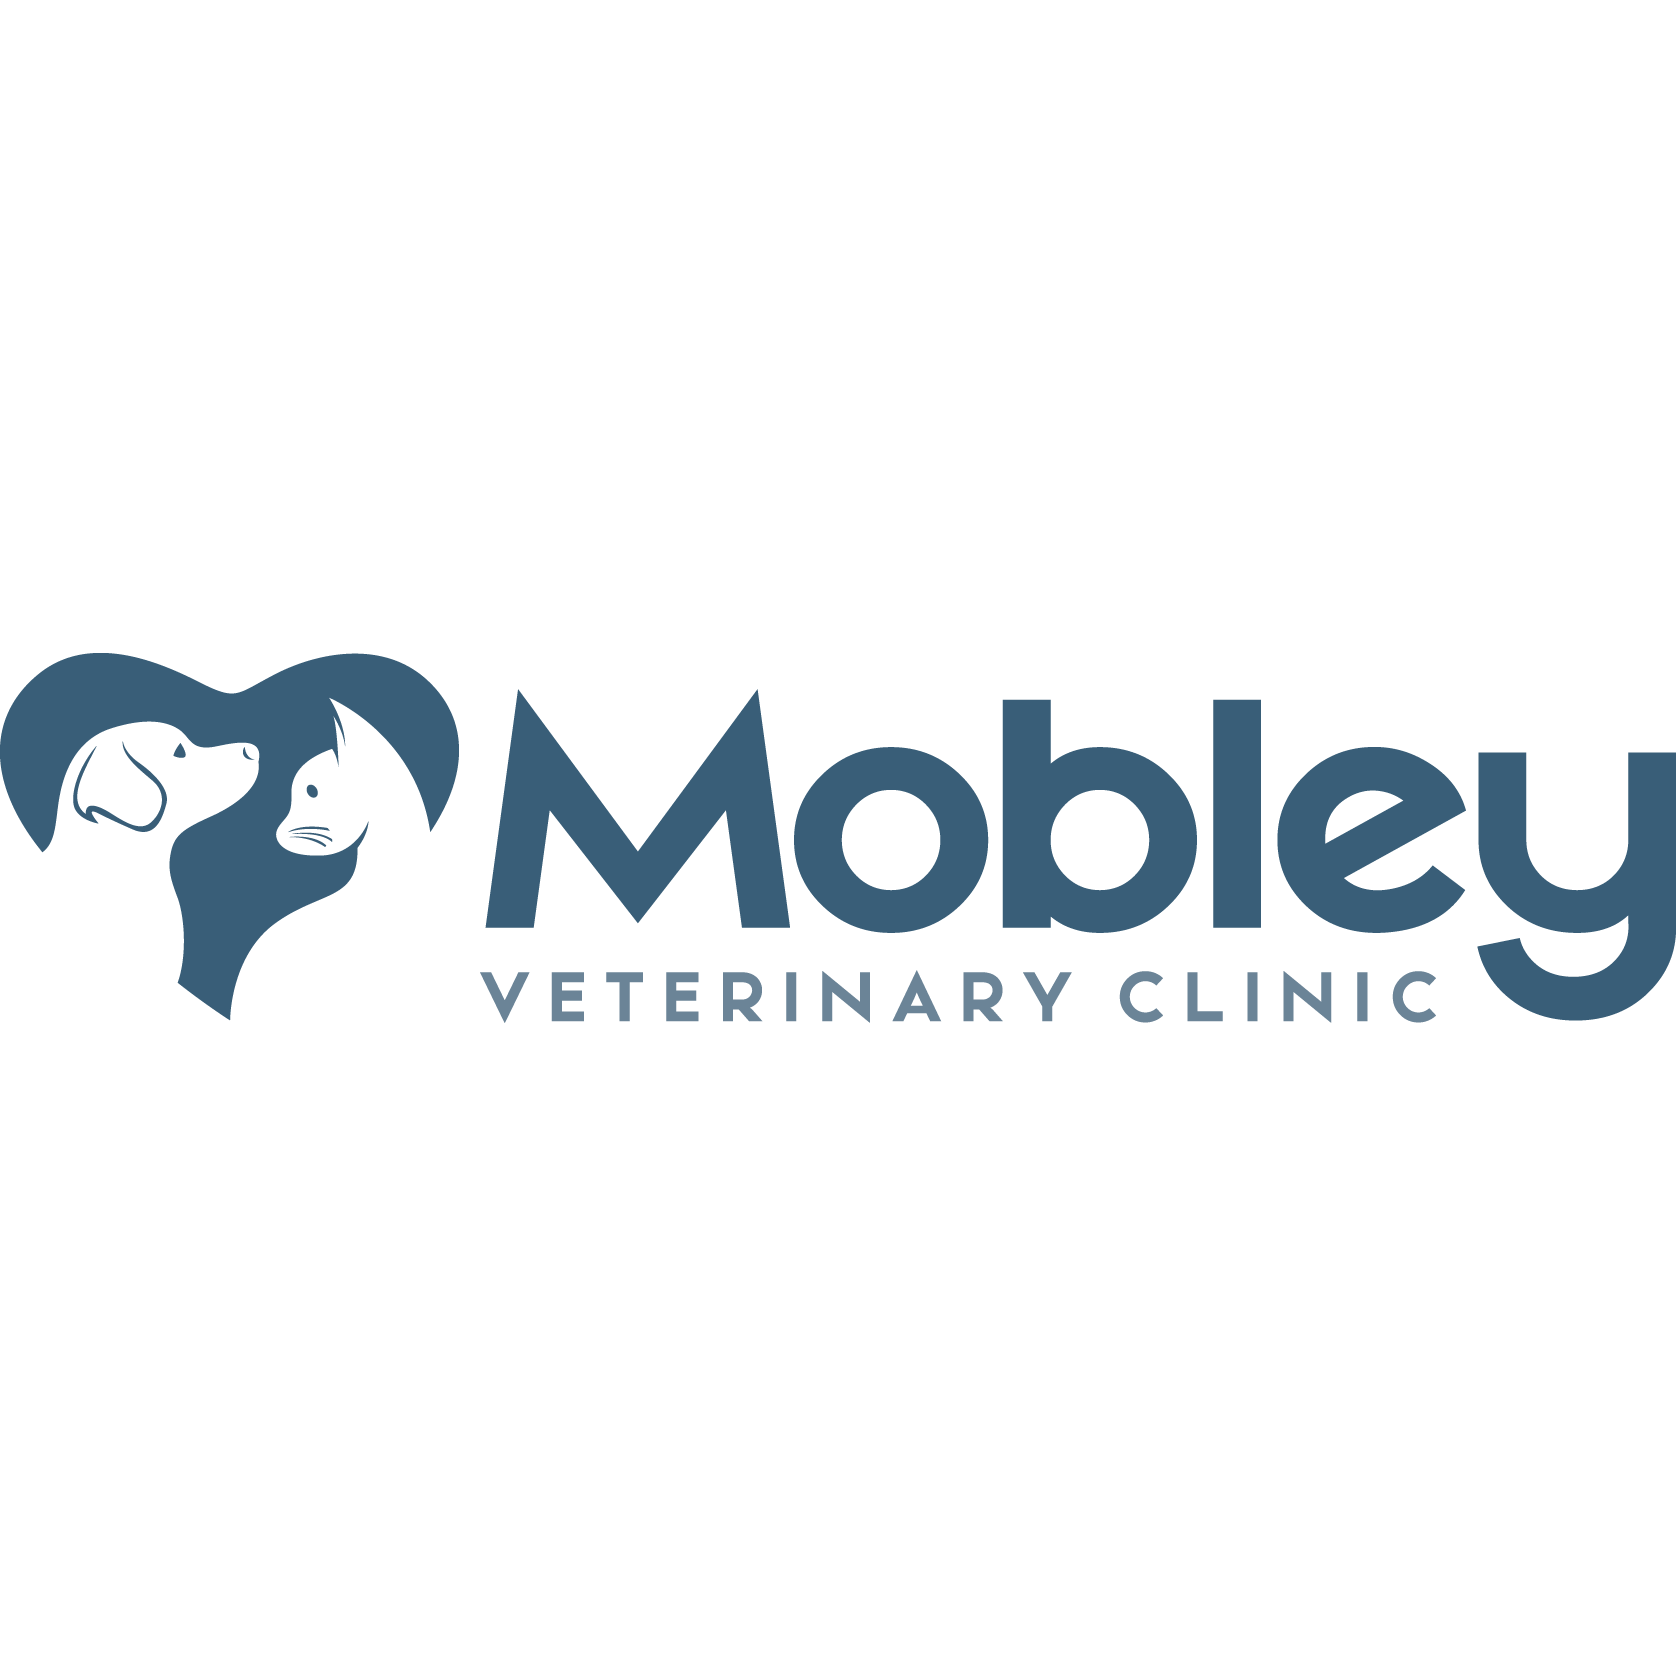 Mobley Veterinary Clinic - Nashville, TN 37216 - (615)262-0415 | ShowMeLocal.com